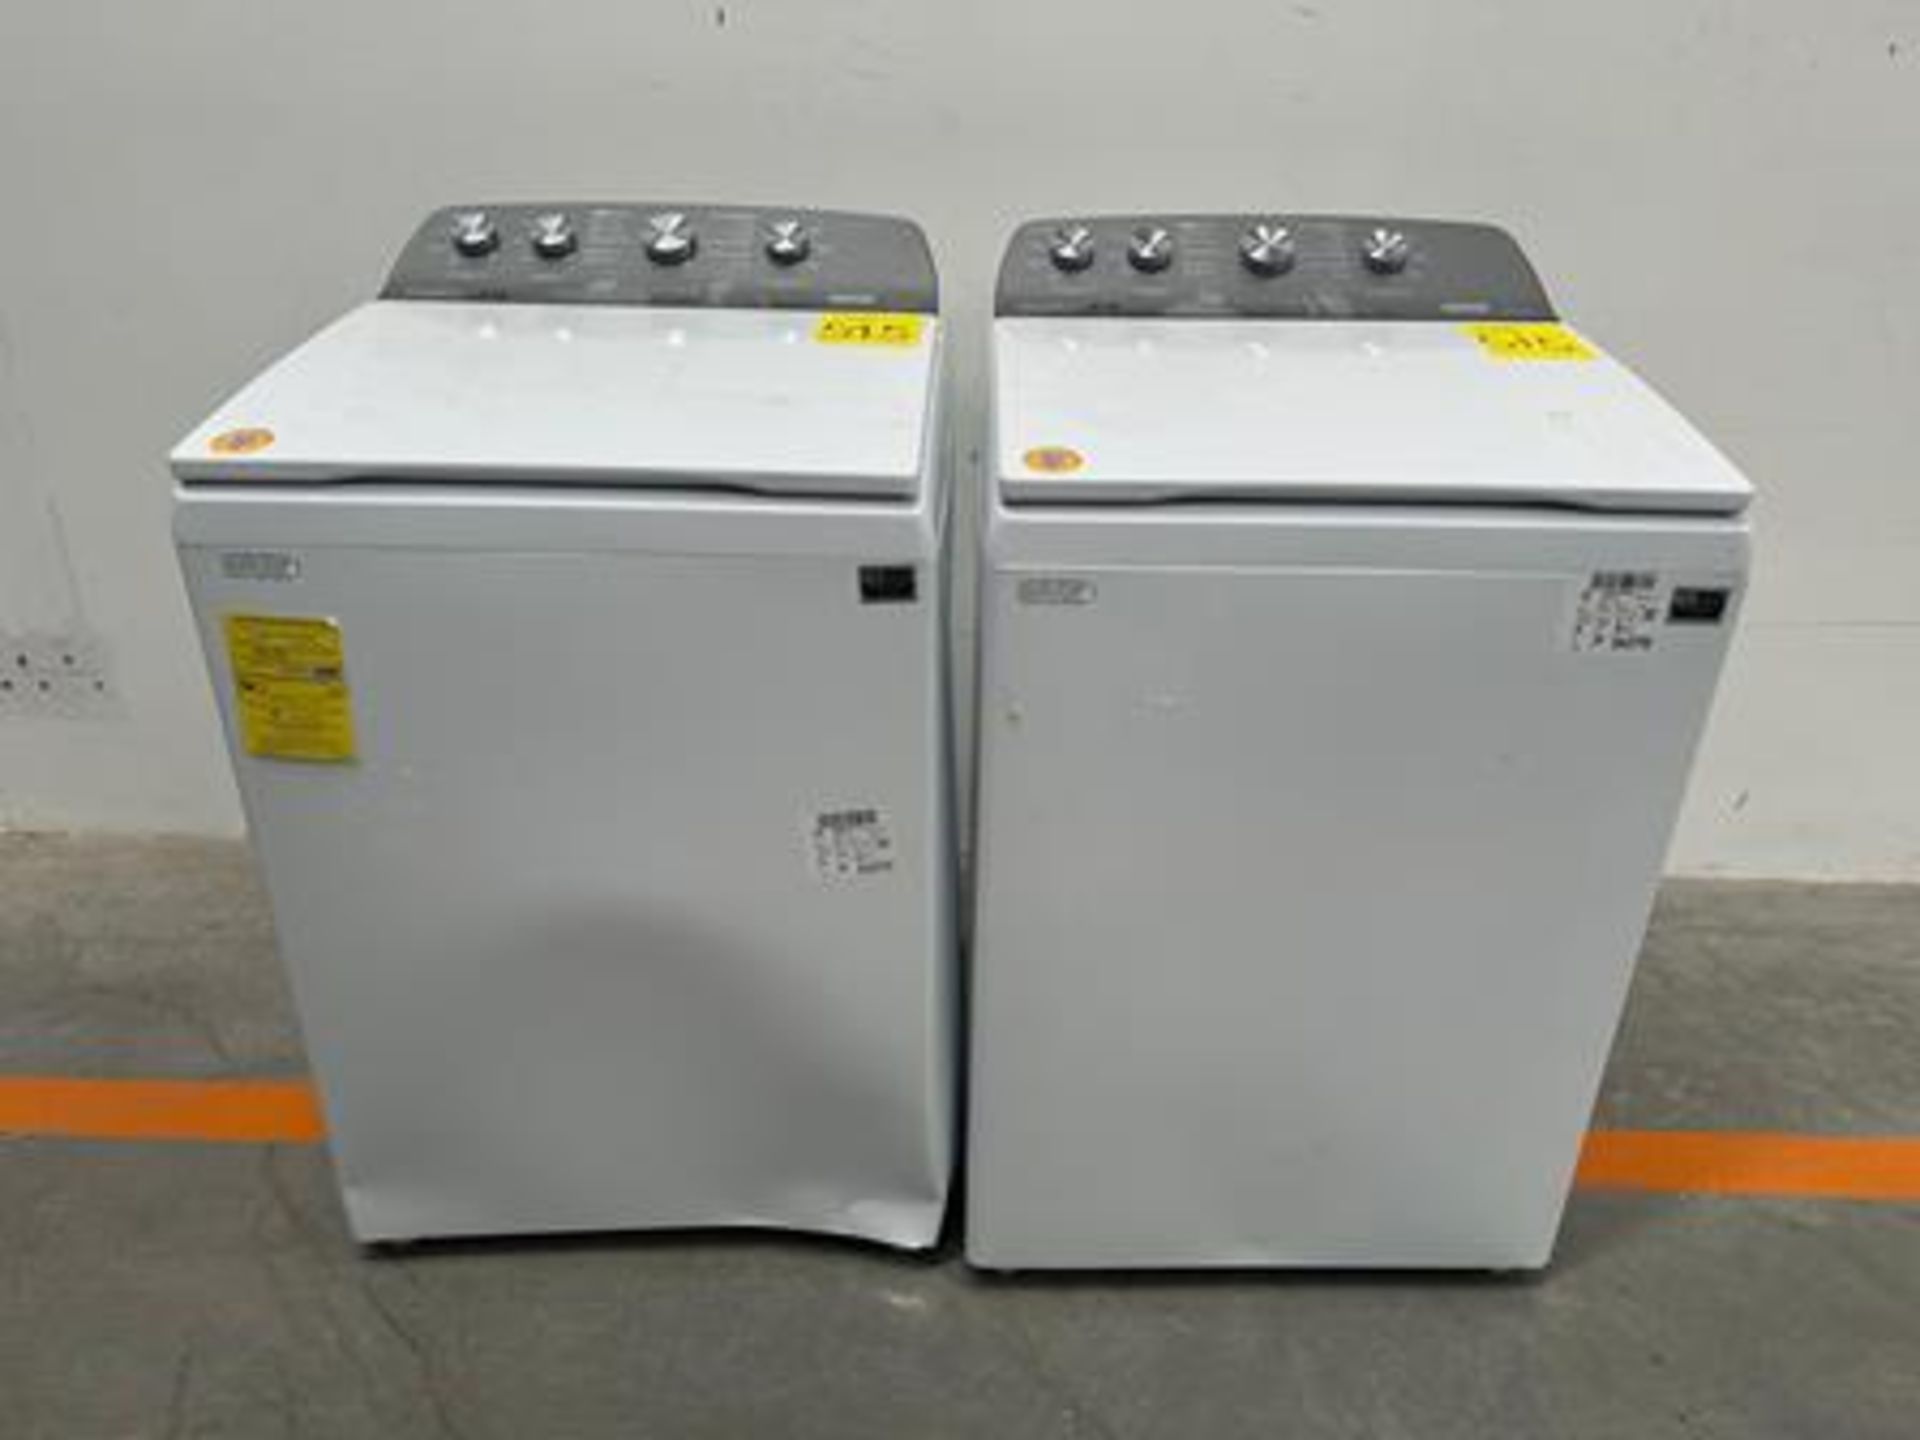 Lote de 2 lavadoras, Contiene: 1 lavadora de 20 Kg Marca WHIRLPOOL, Modelo 8MWTW2024WLG0, Serie 909